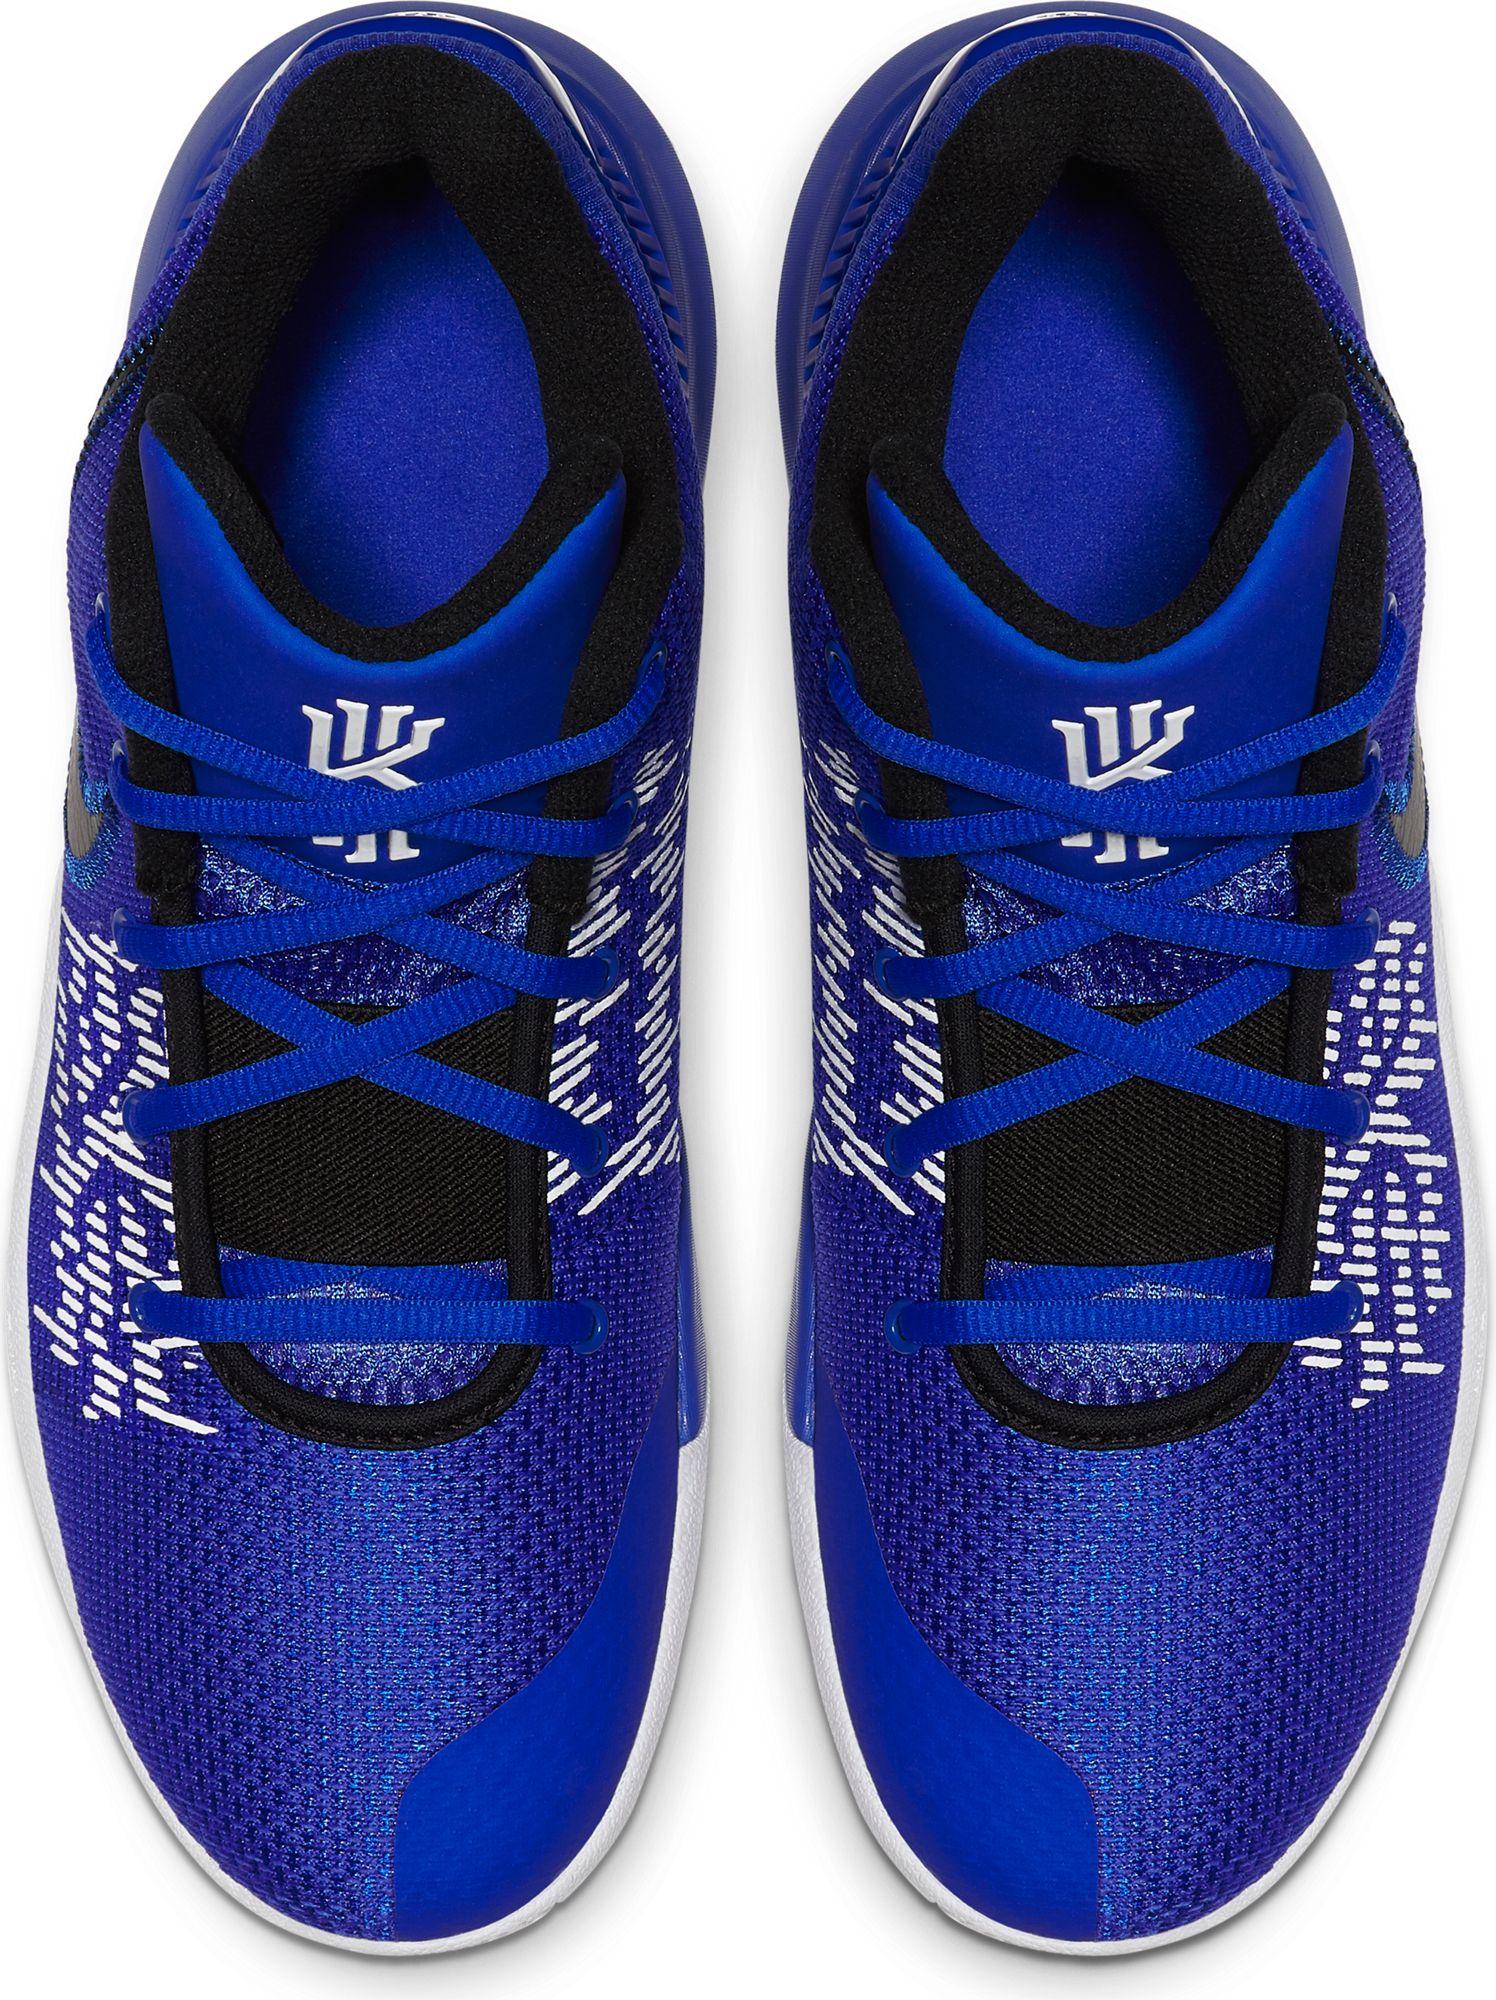 Nike Kyrie Flytrap Ii Basketball Shoes in Blue/Black (Blue) for Men | Lyst